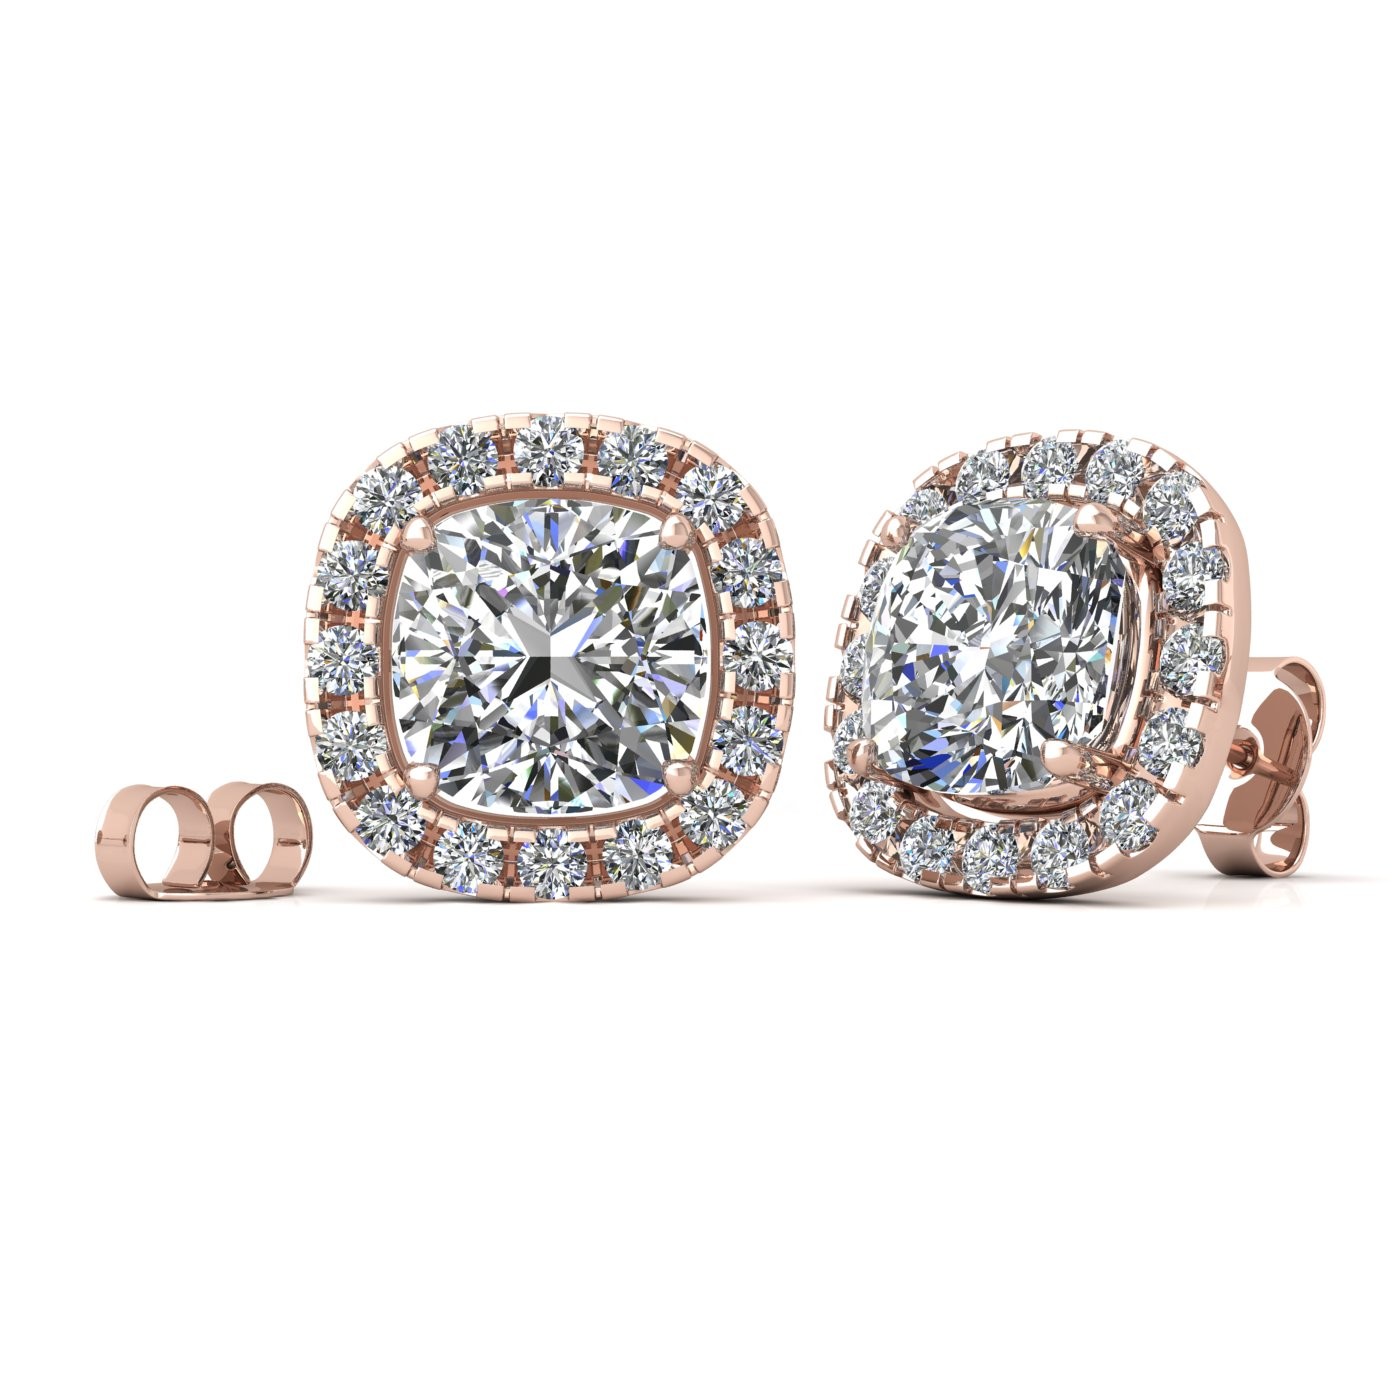 18k rose gold  2,0 ct each (4,0 tcw) 4 prongs cushion shape diamond earrings with diamond pavÉ set halo